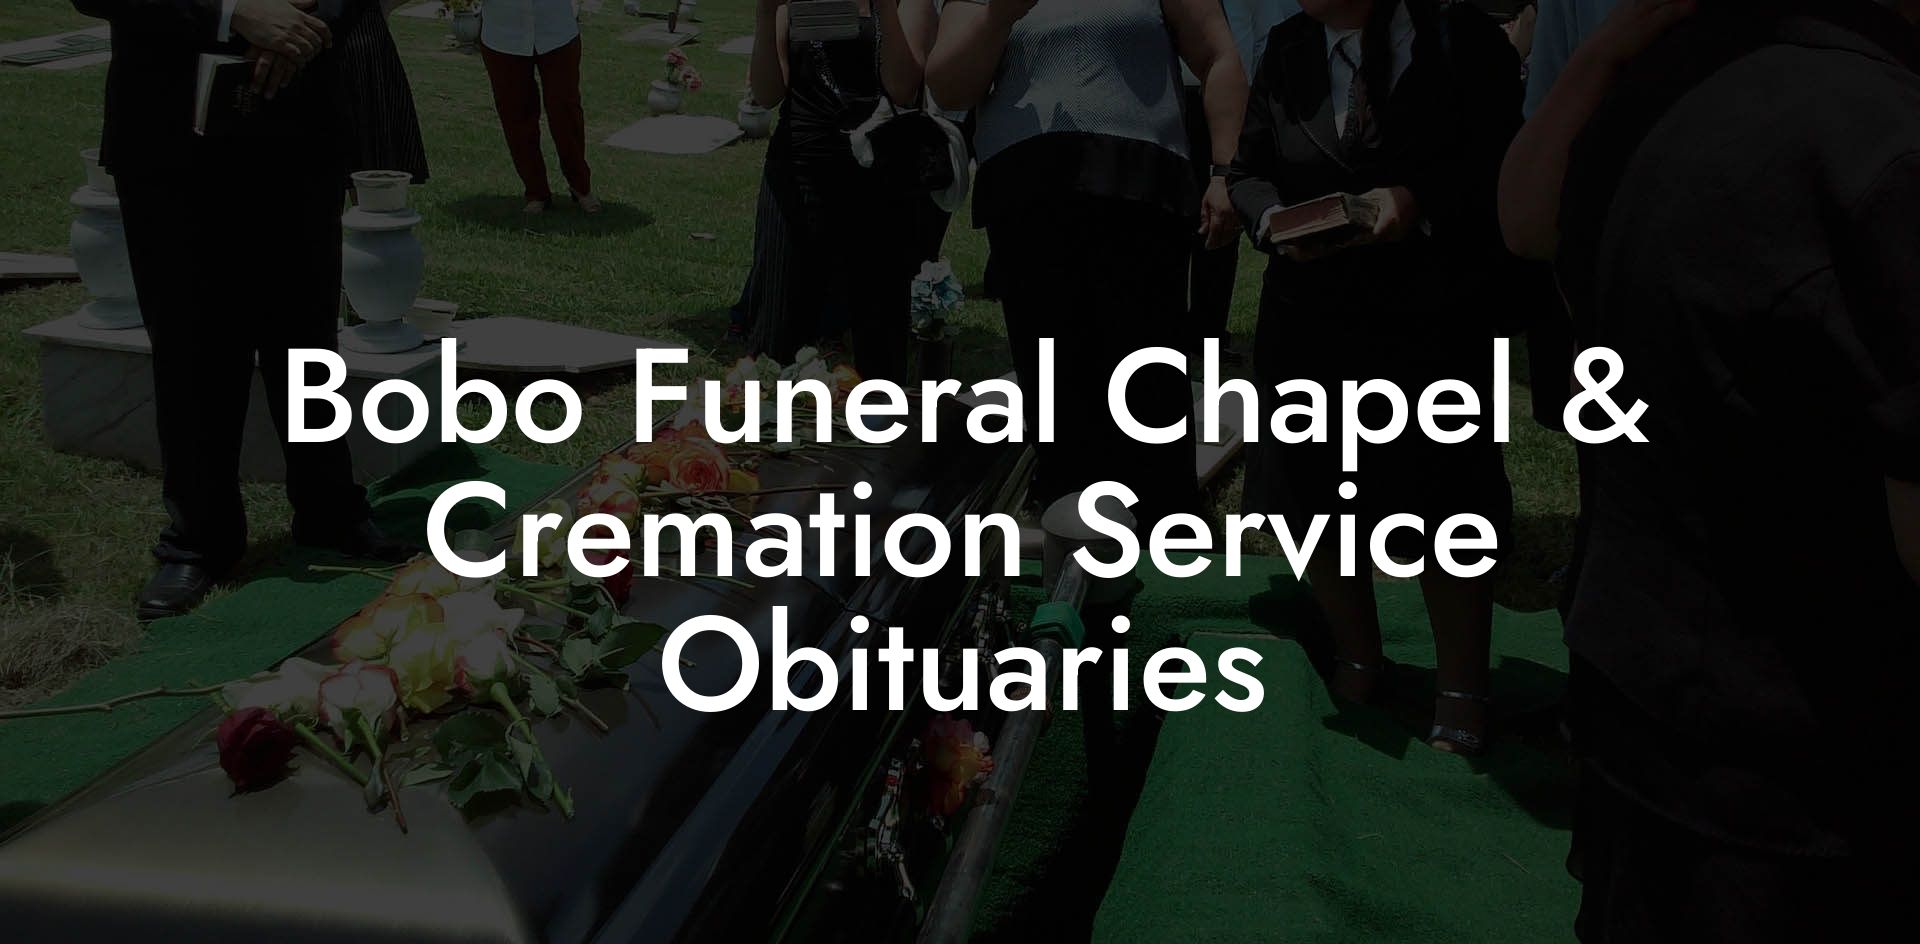 Bobo Funeral Chapel & Cremation Service Obituaries